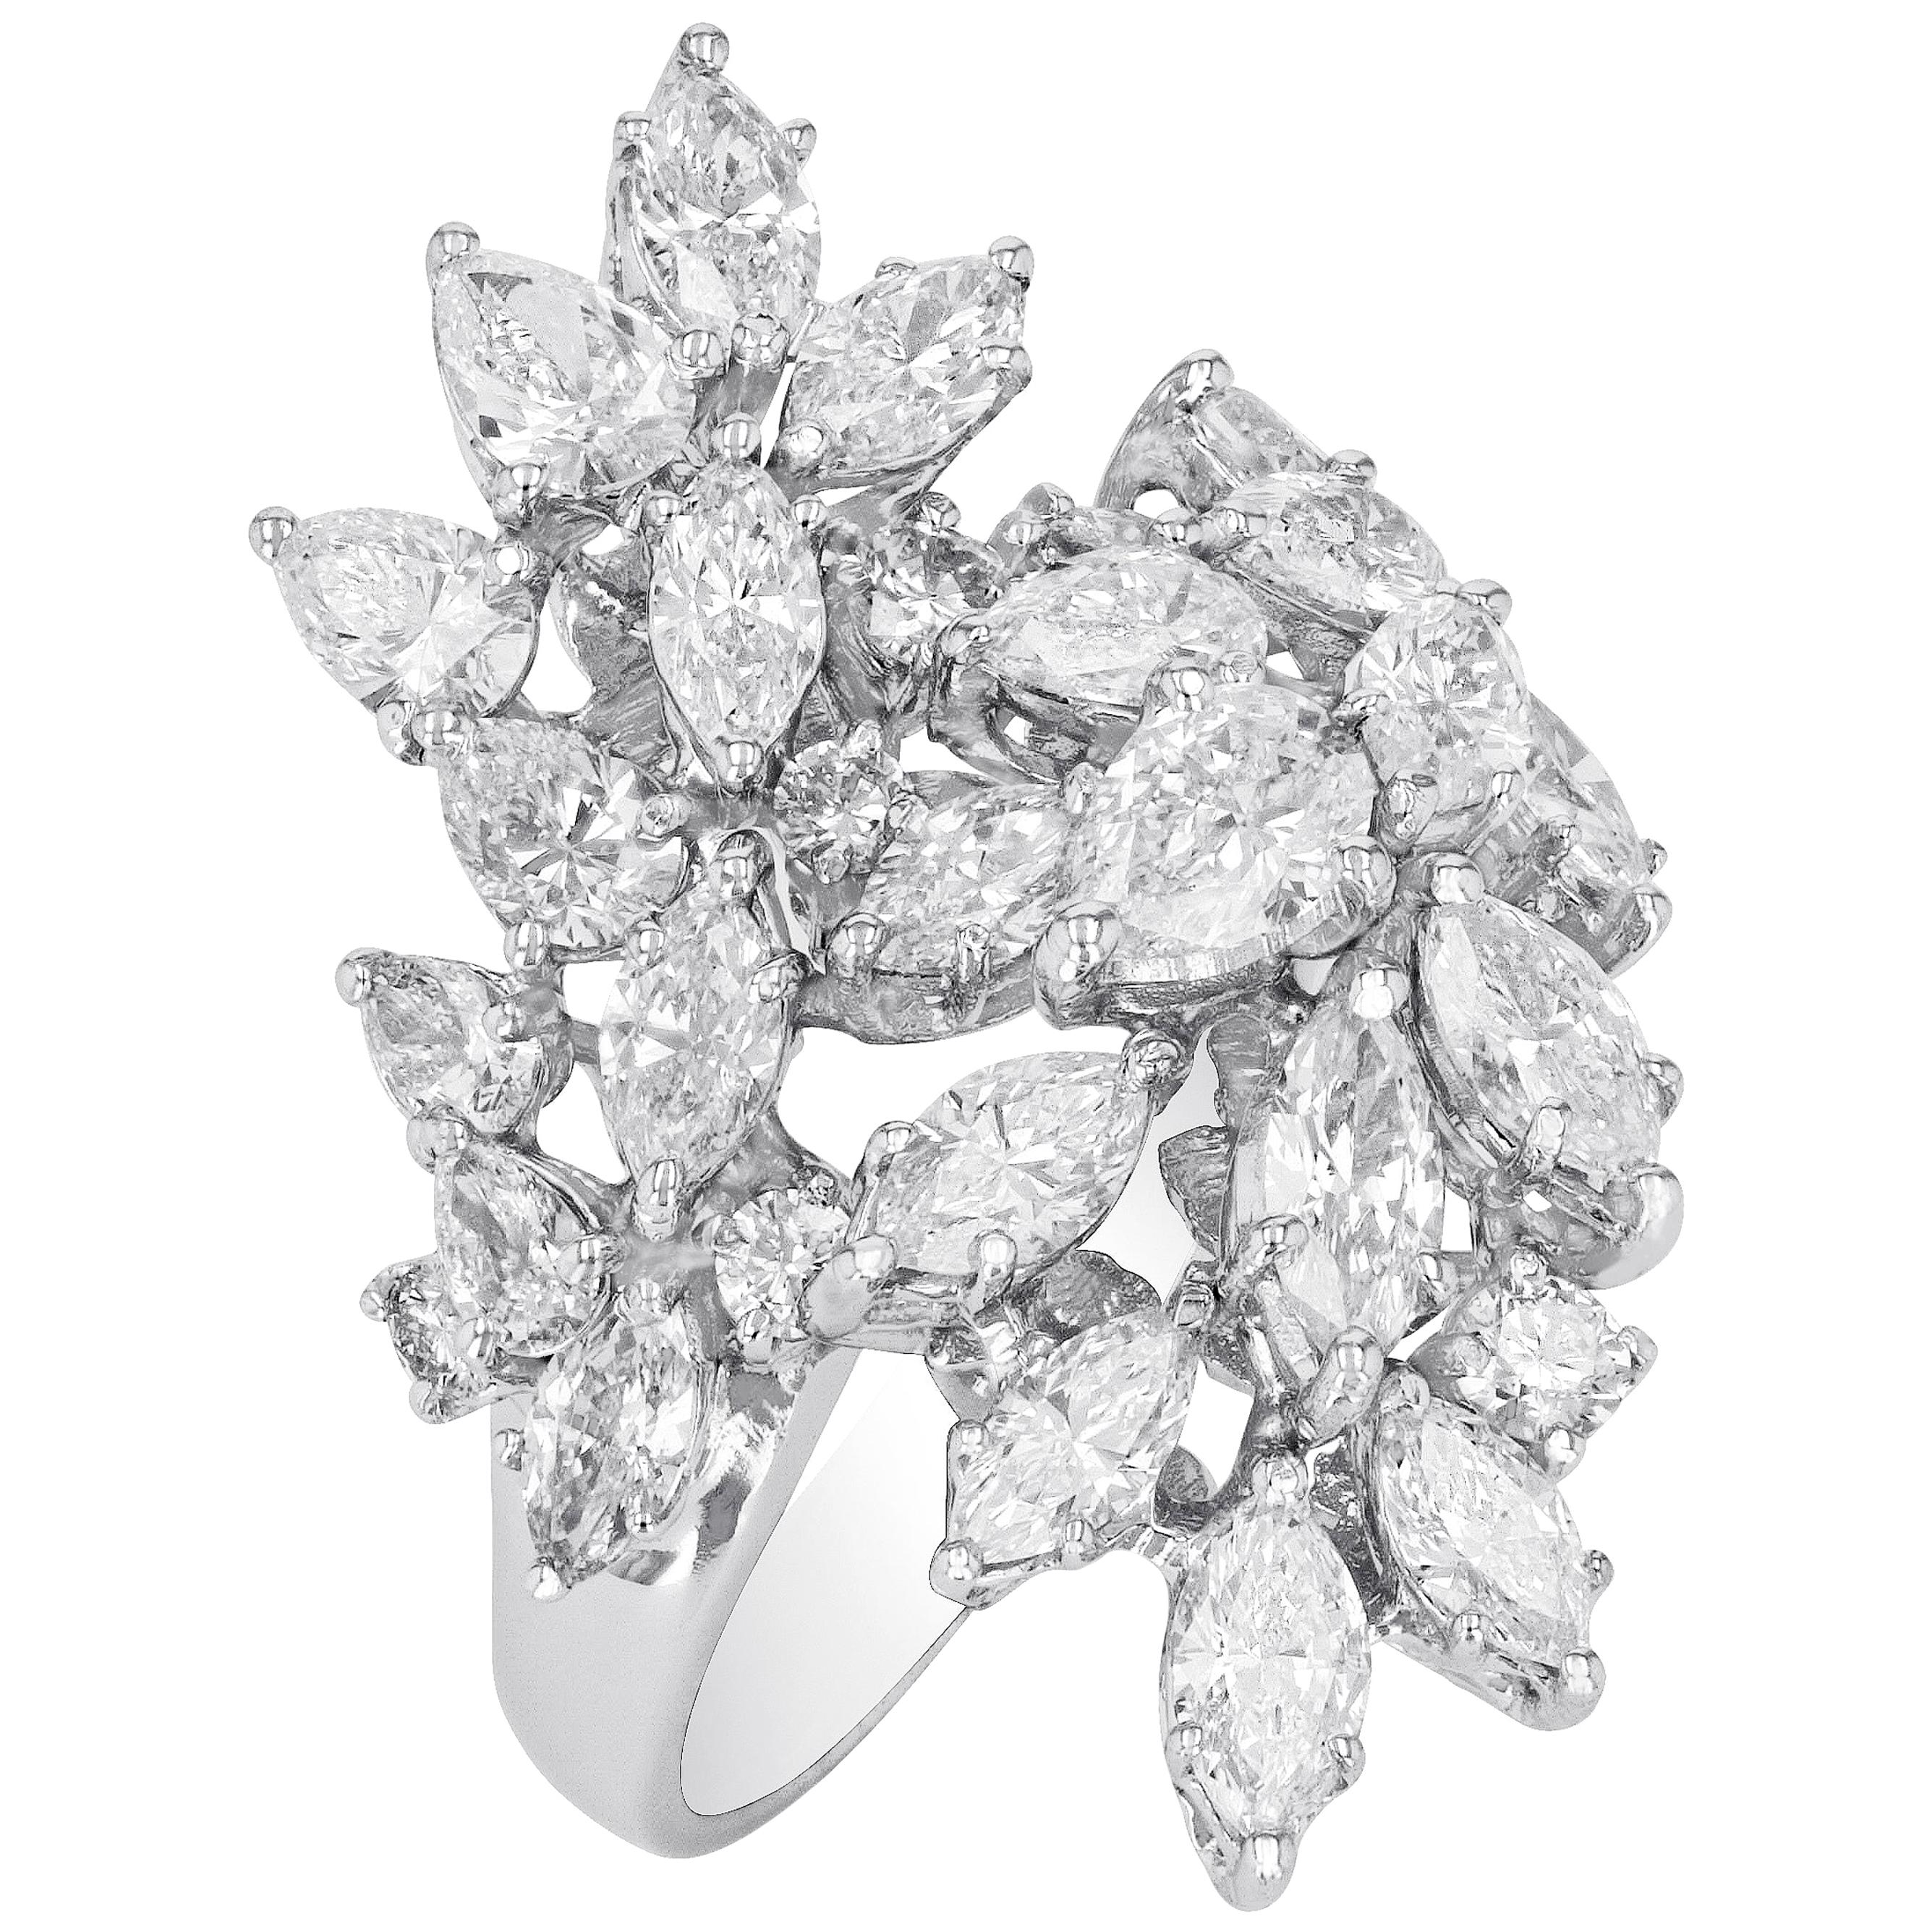 Amwaj Jewelry Pear and Marquise Cut Diamonds Ring in 18 Karat White Gold